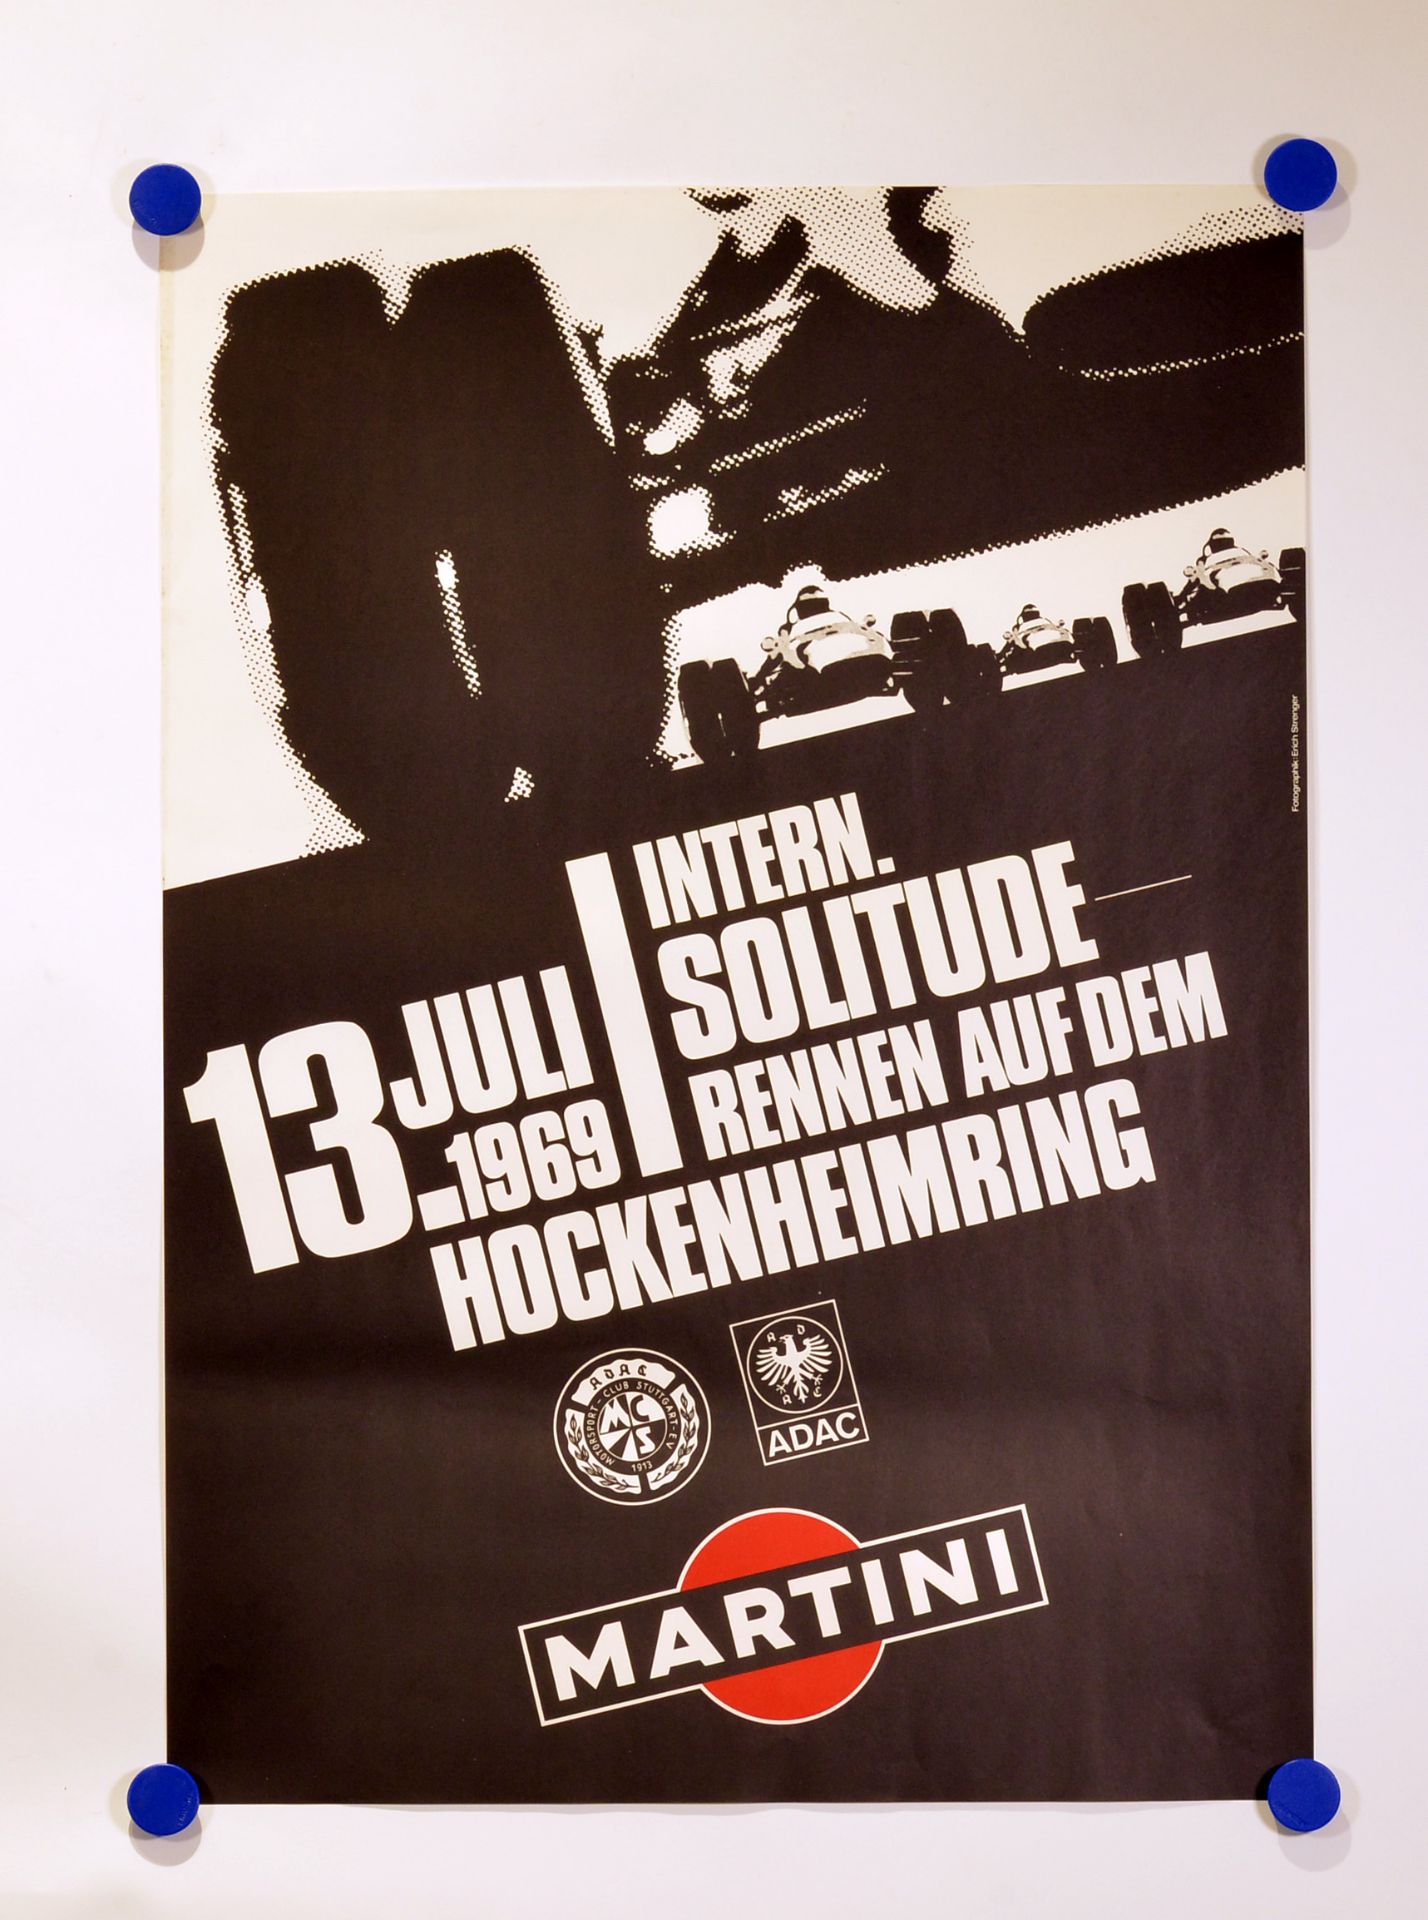 Poster, Martini Hockenheim, 1969, (black/white), race poster, designed by Erich Strenger (who was